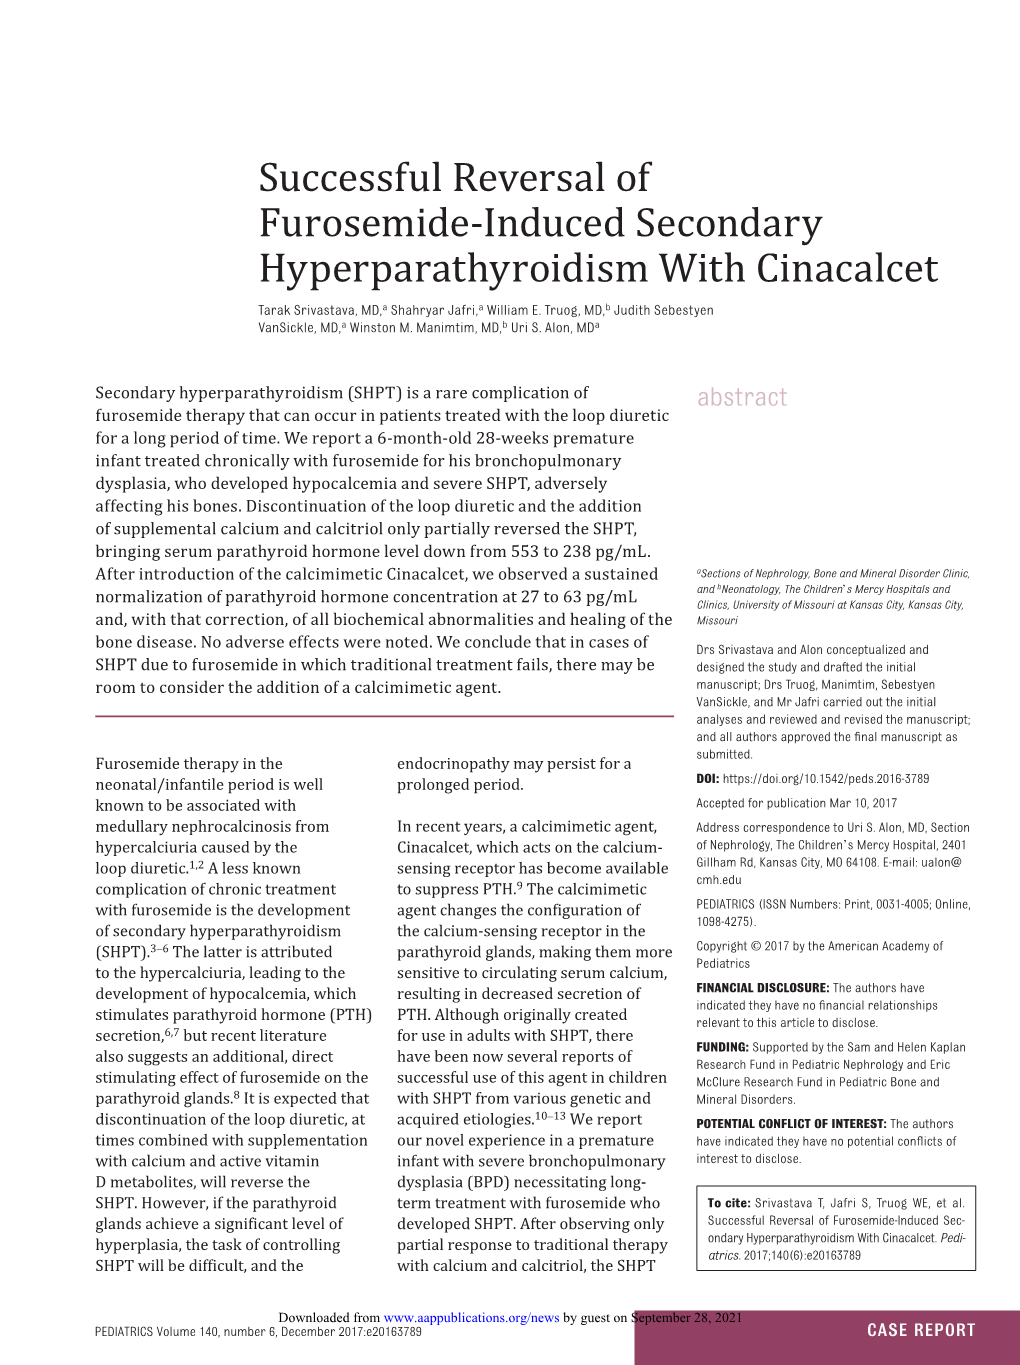 Successful Reversal of Furosemide-Induced Secondary Hyperparathyroidism with Cinacalcet Tarak Srivastava, Shahryar Jafri, William E